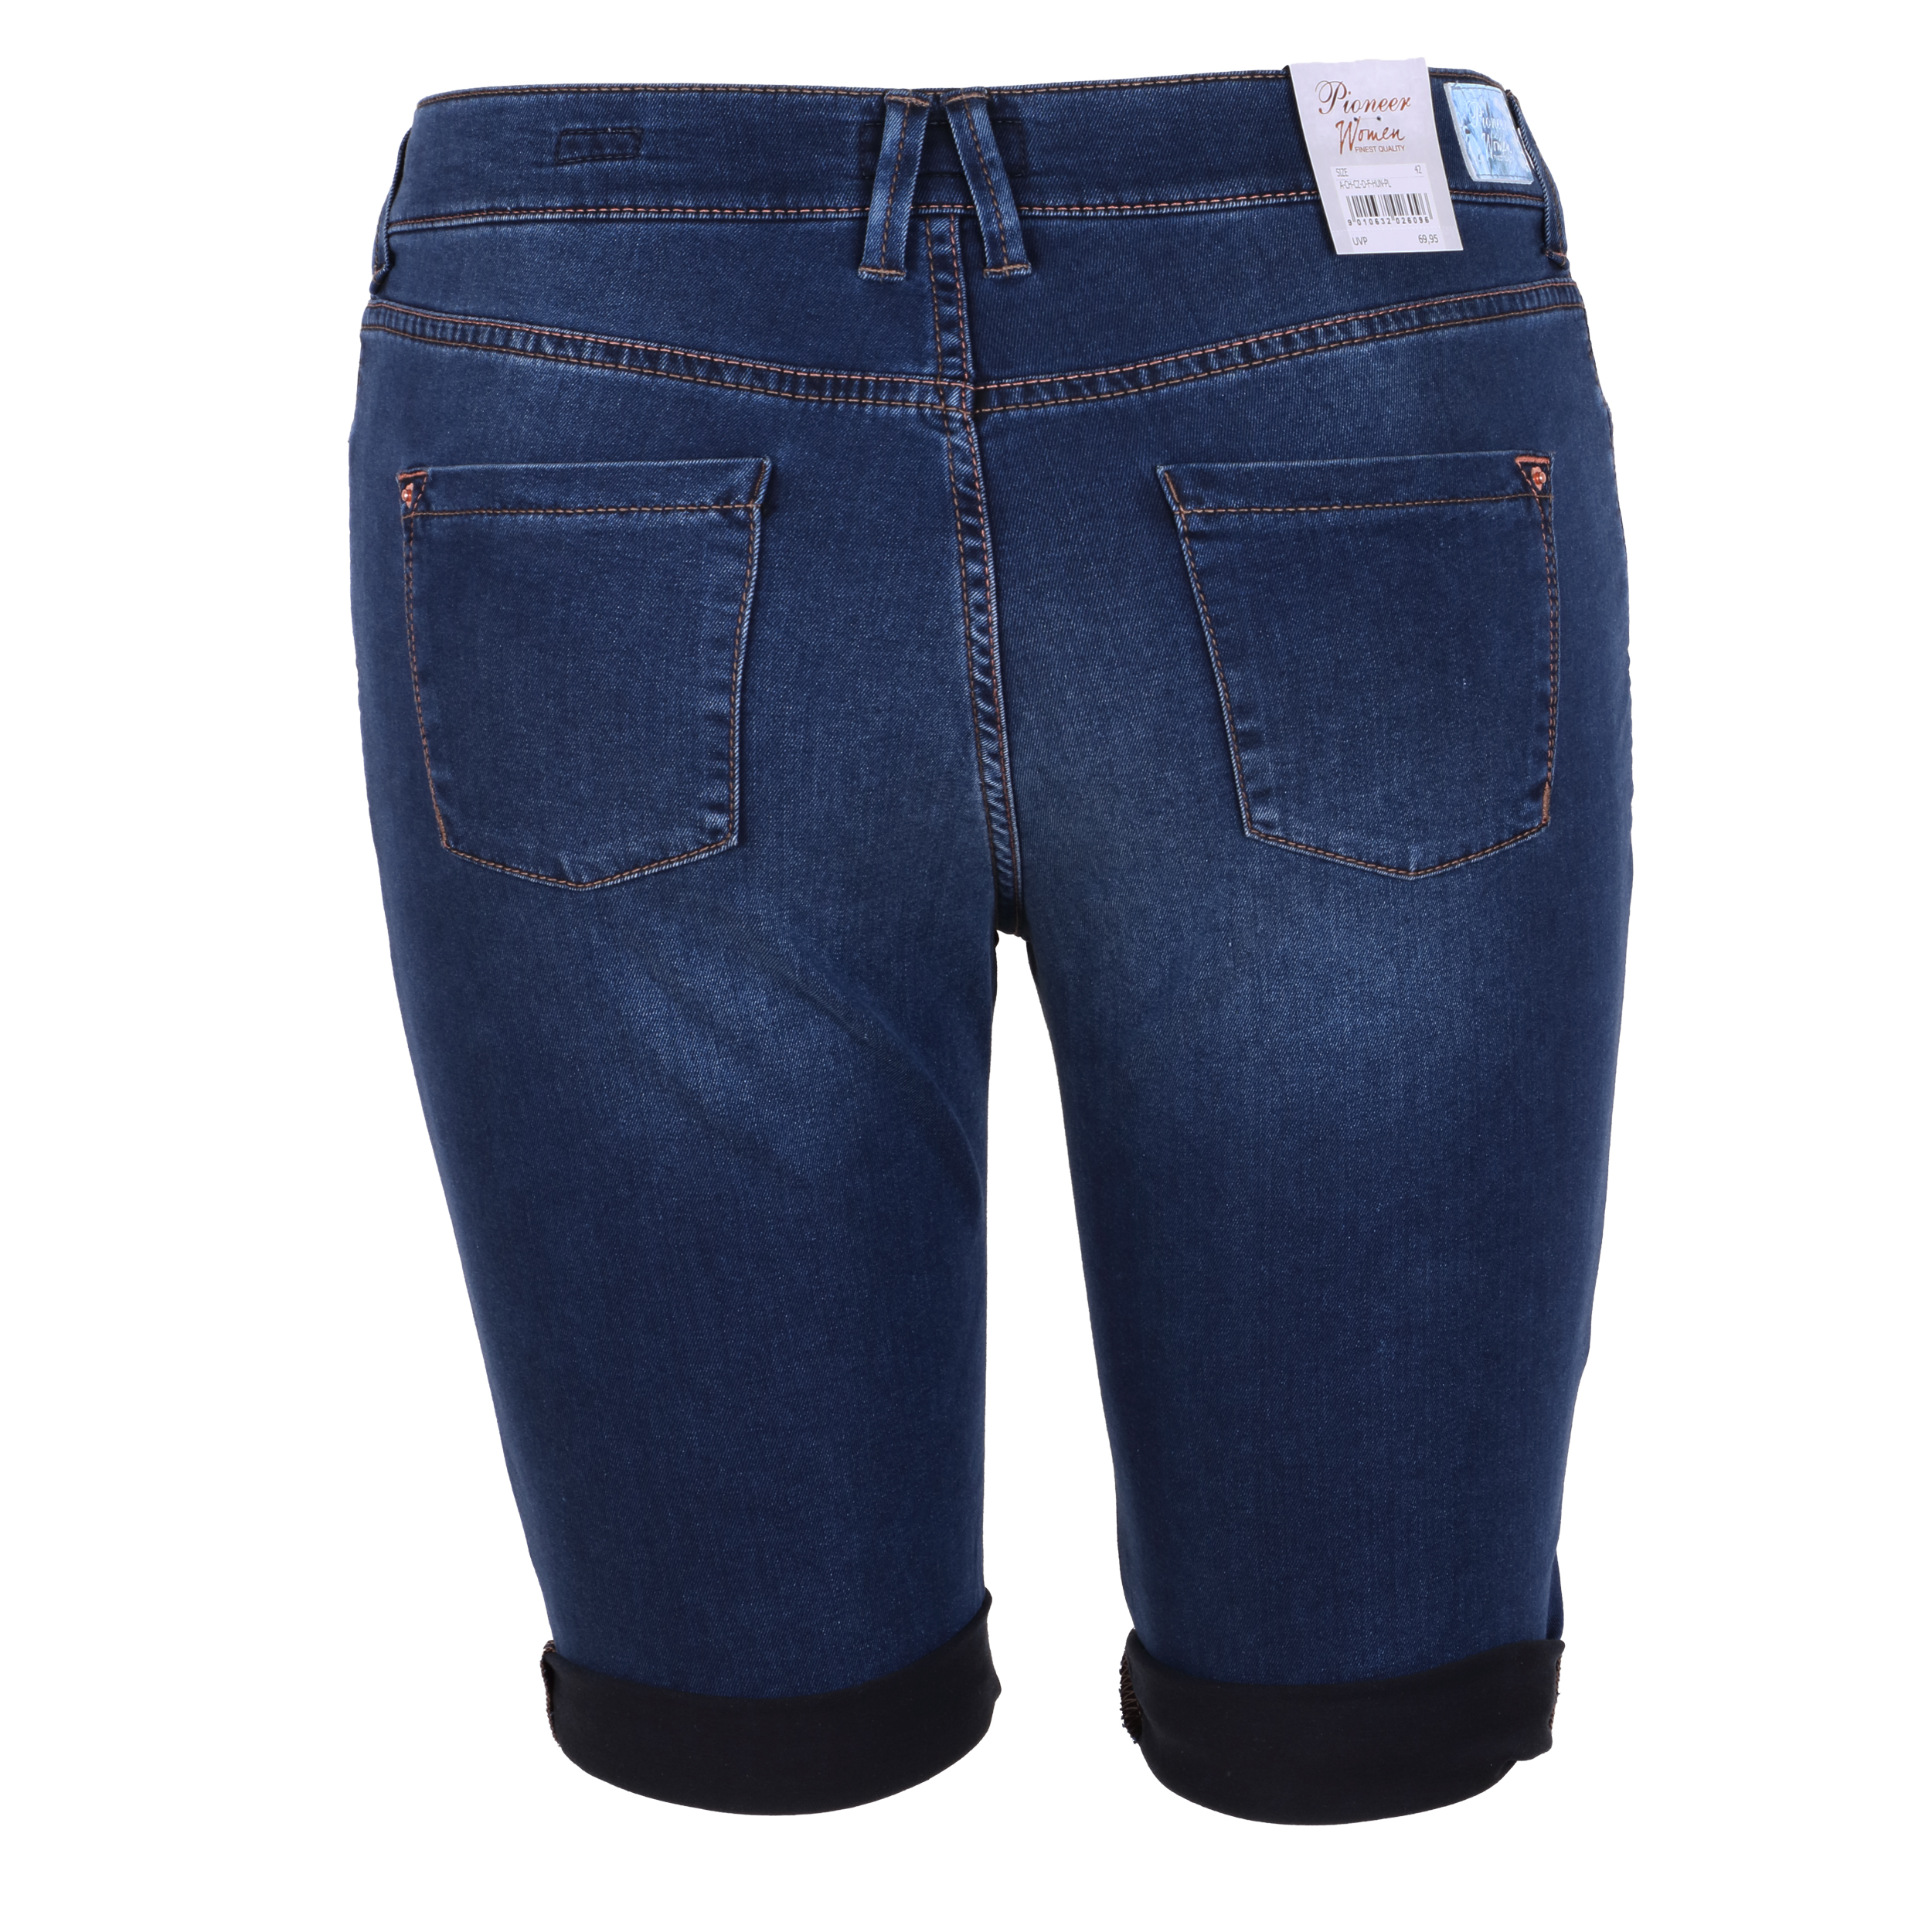 Pioneer Damen Jeans-Shorts 42 blau